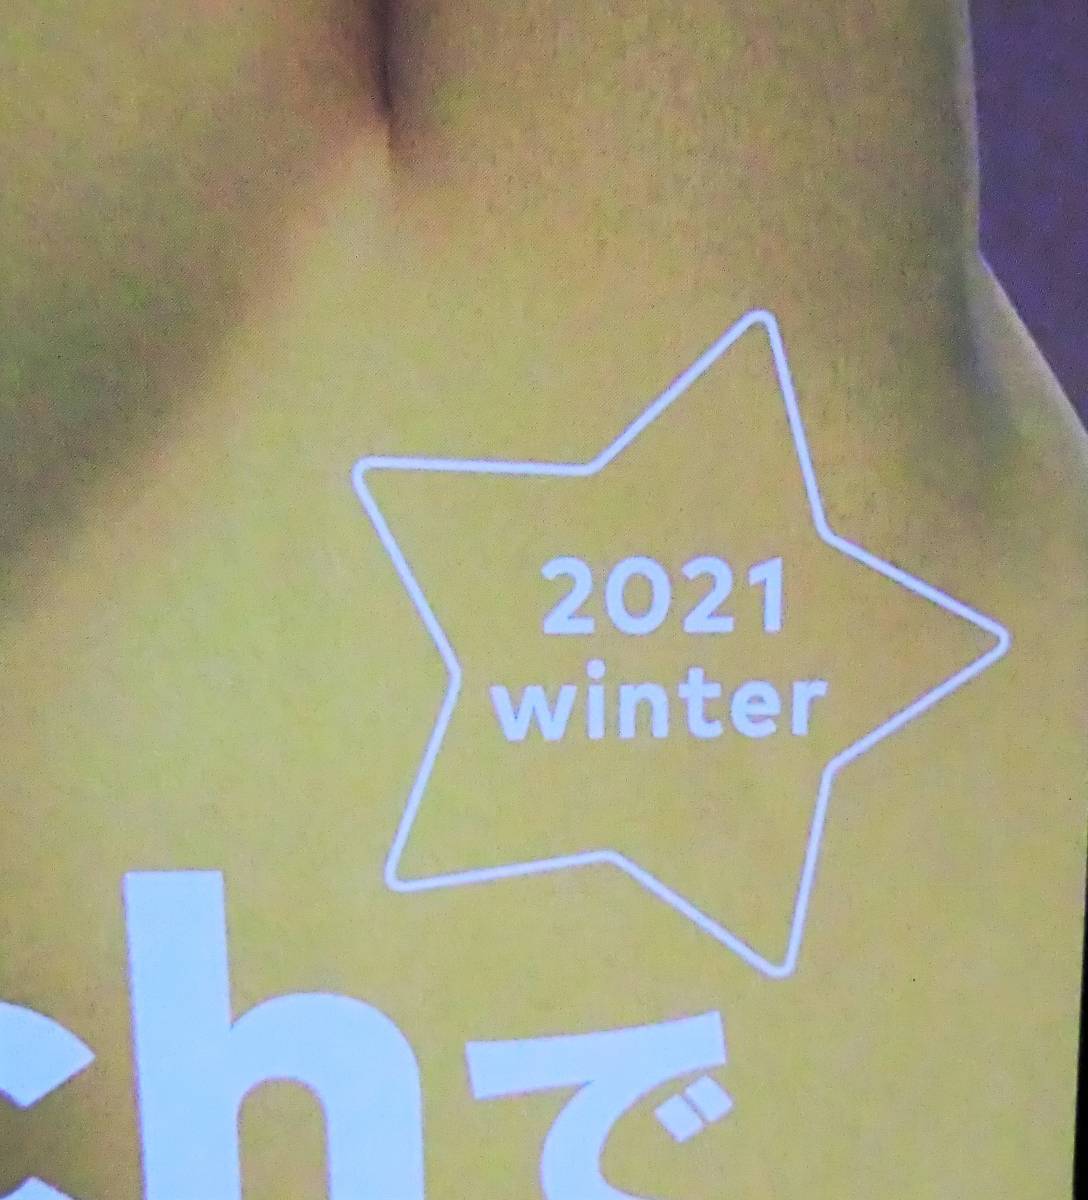 Nintendo Magazine◇ニンテンドーマガジン 2021 winter 冬◇マリパのすすめ◇任天堂◇ポケモン◇ピカチュウ_画像3